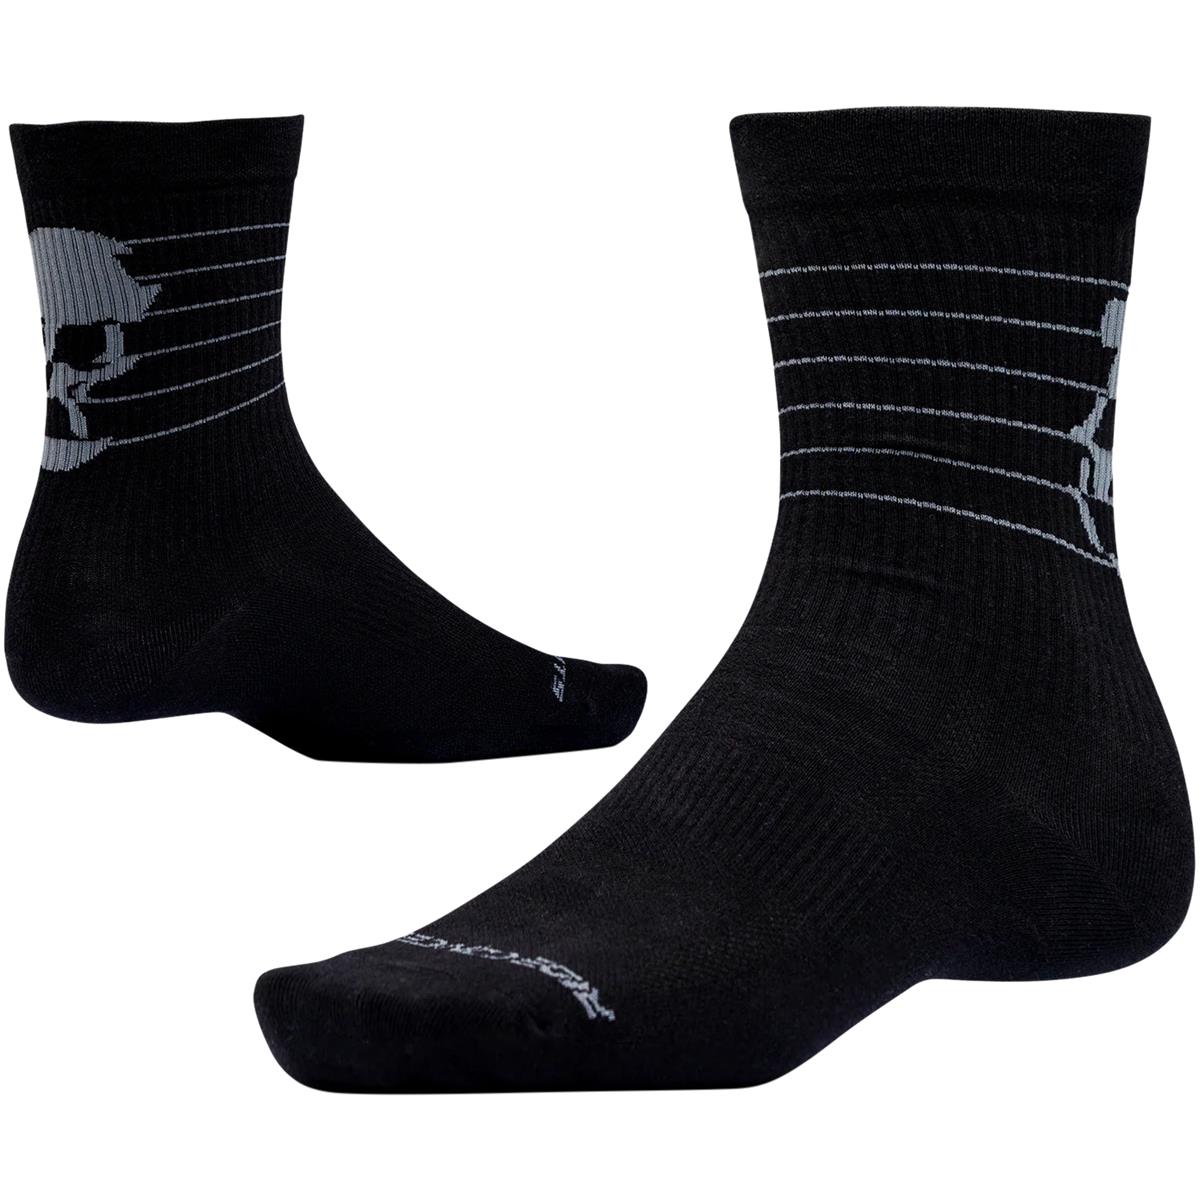 Ride Concepts MTB Socks Skully Black/Charcoal